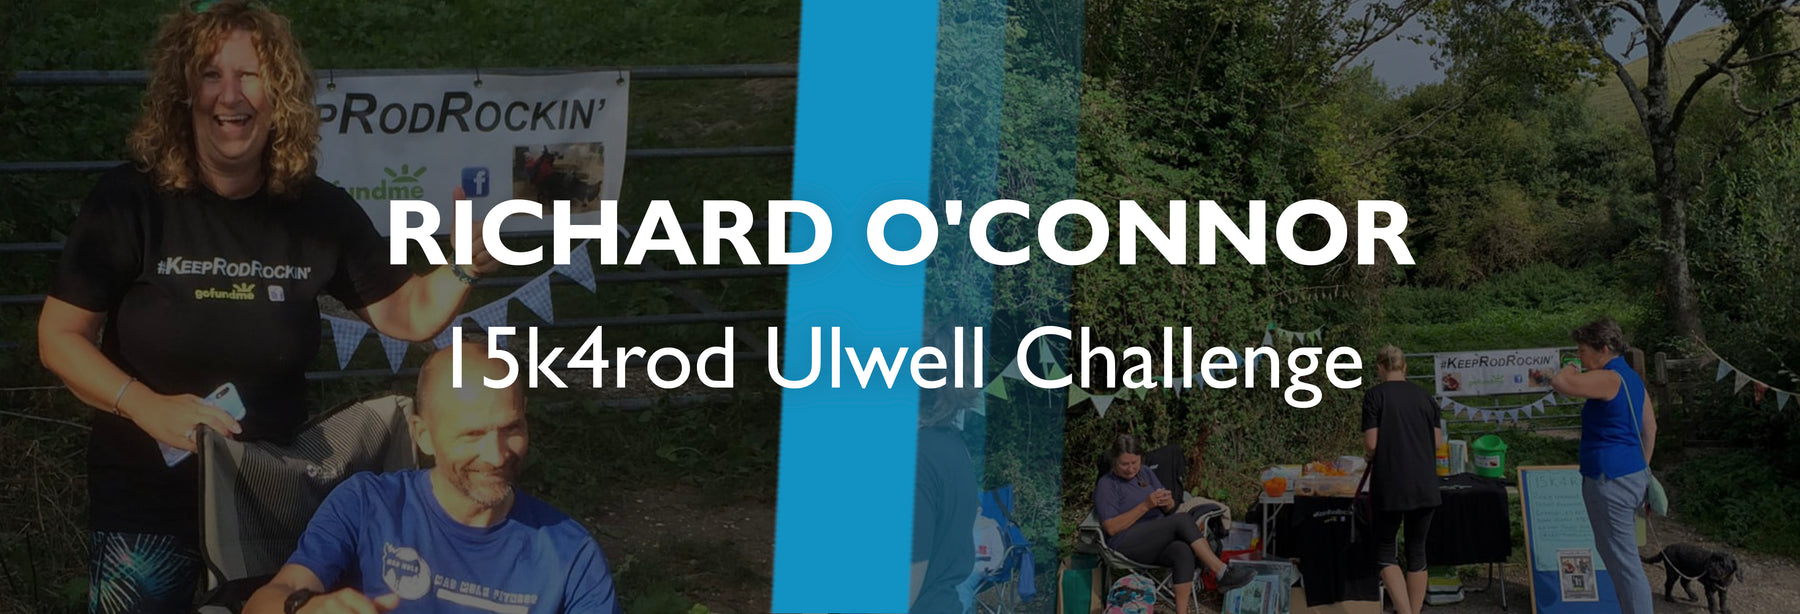 Richard O'Connor - 15k4rod Ulwell Challenge